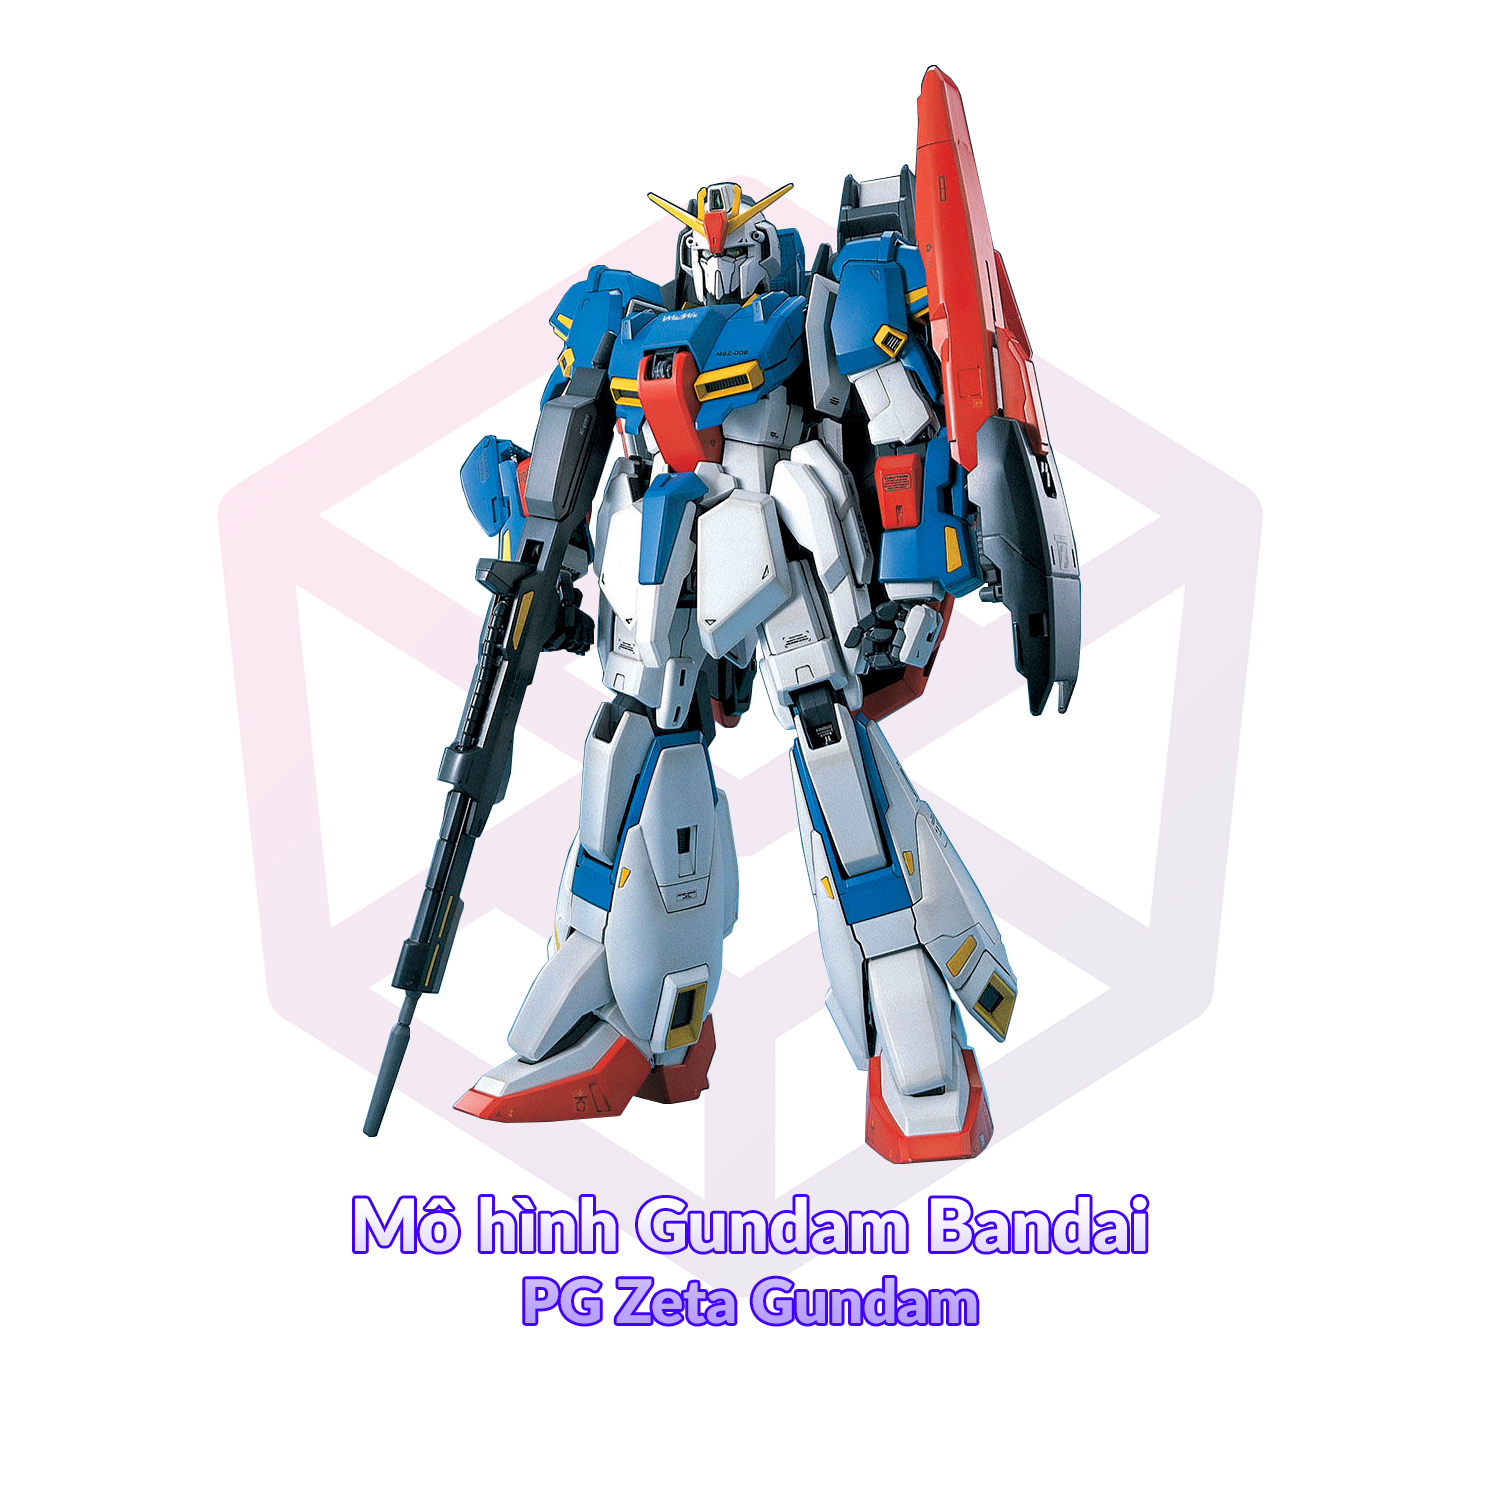 Mô hình Gundam Bandai PG Zeta Gundam 1 60 MS Gundam Zeta GDB BPG